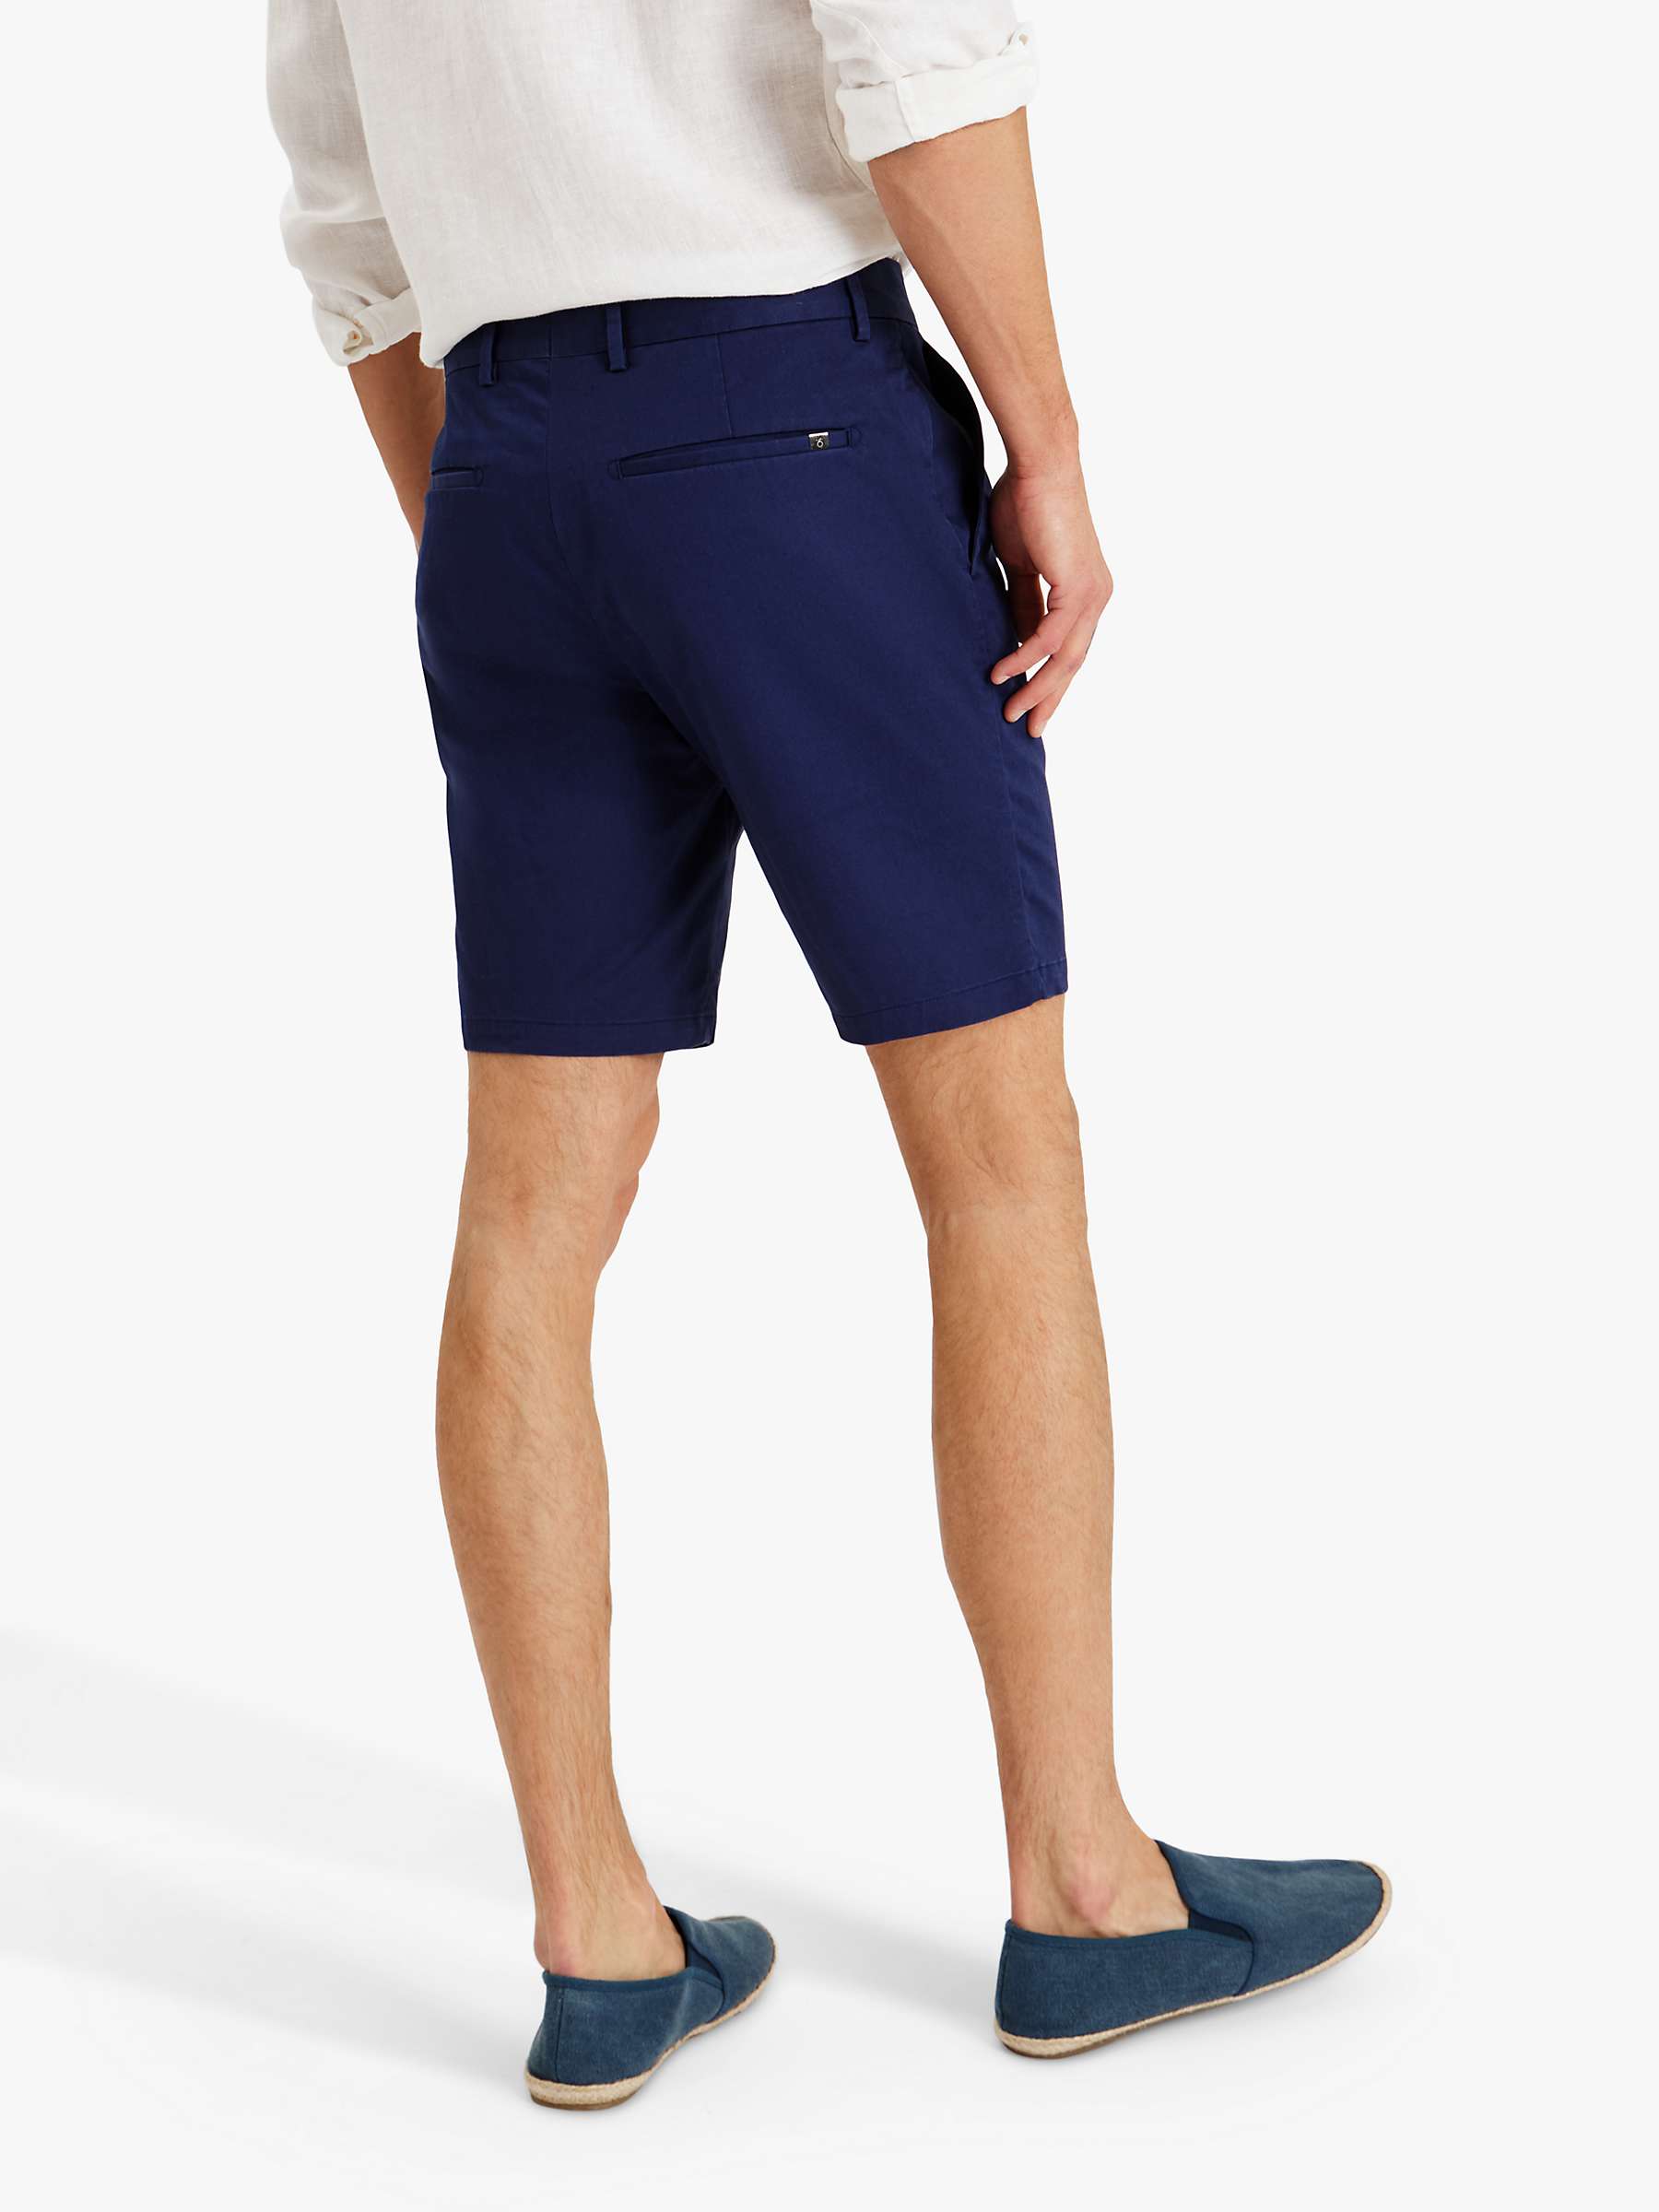 Buy SPOKE Sharps Cotton Blend Narrow Thigh Shorts Online at johnlewis.com